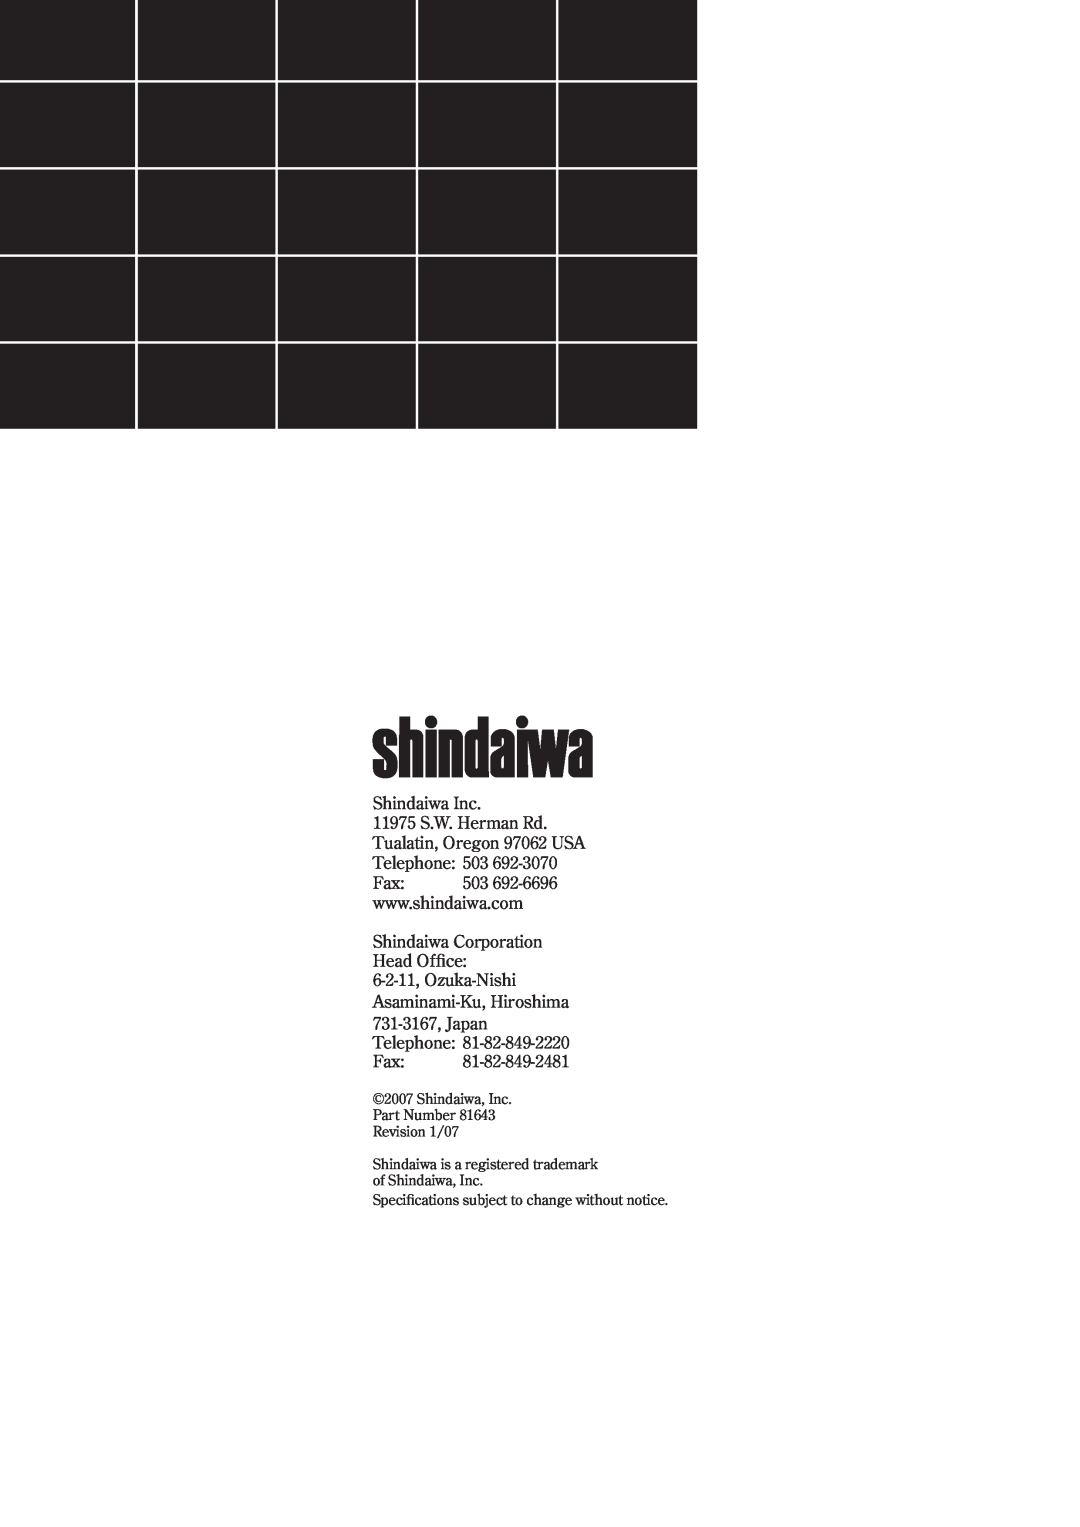 Shindaiwa T242X, 81643 manual Shindaiwa Inc 11975 S.W. Herman Rd Tualatin, Oregon 97062 USA, Telephone 503 